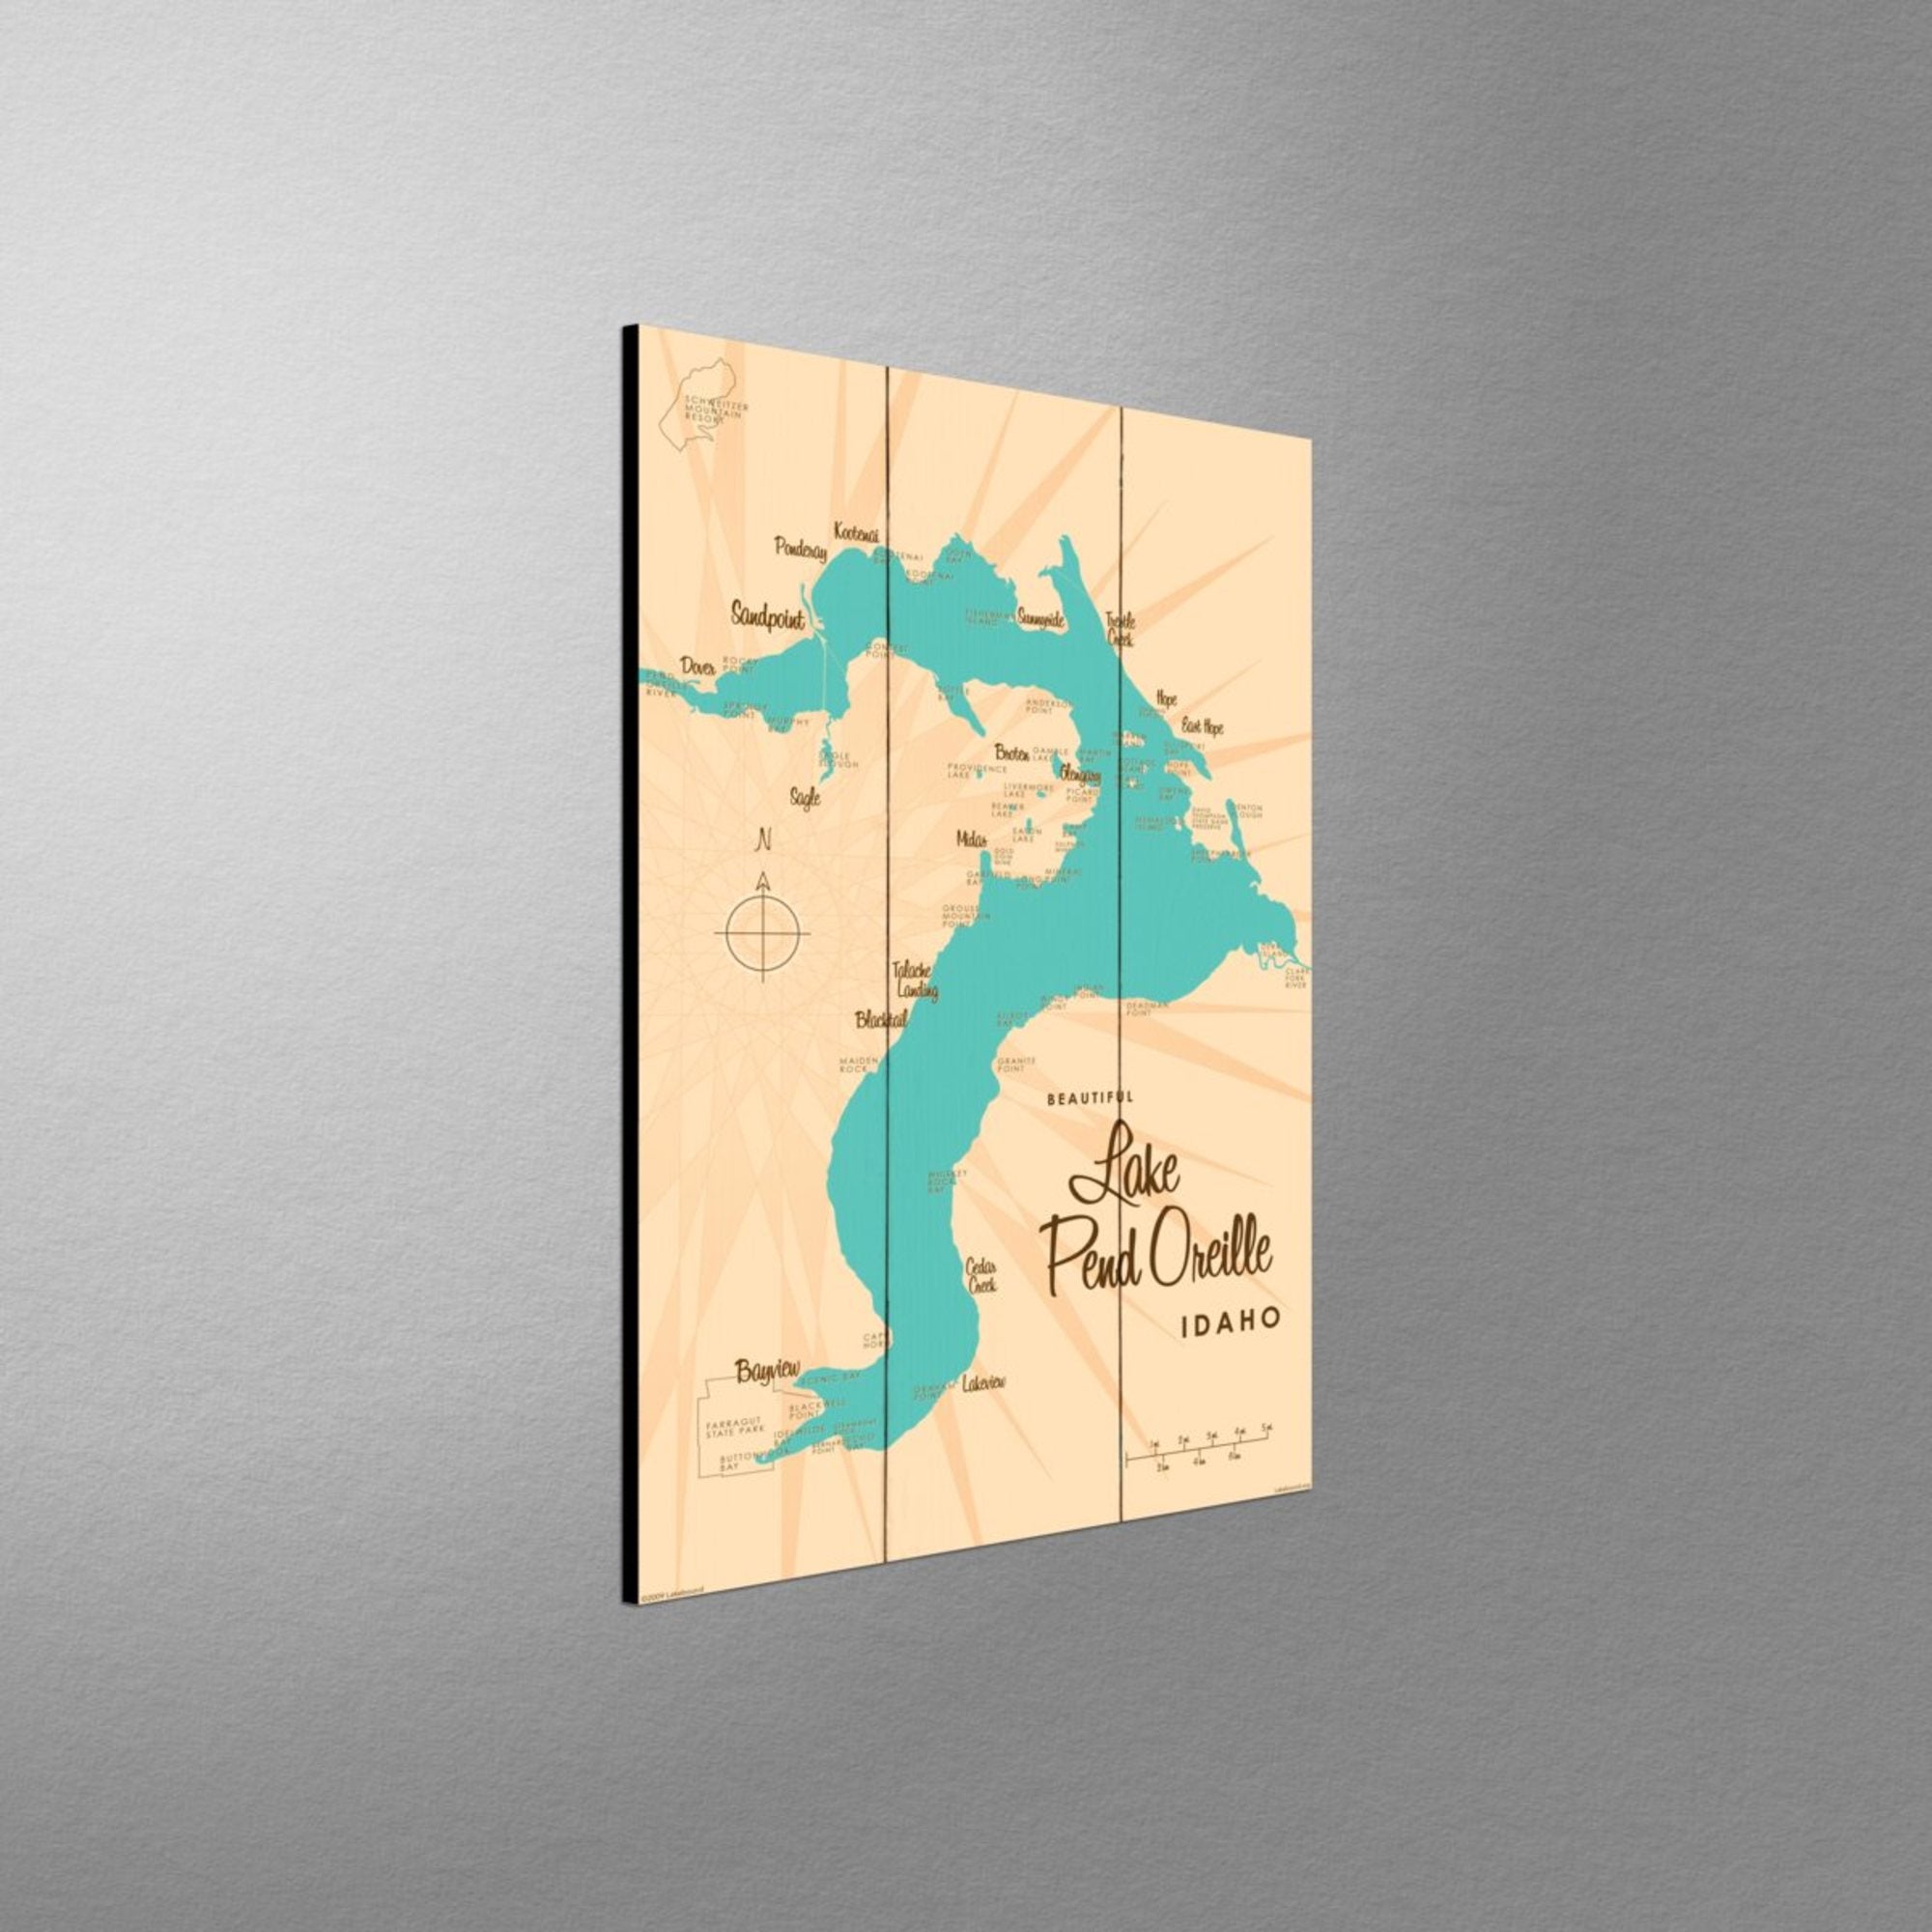 Lake Pend Oreille Idaho, Wood Sign Map Art